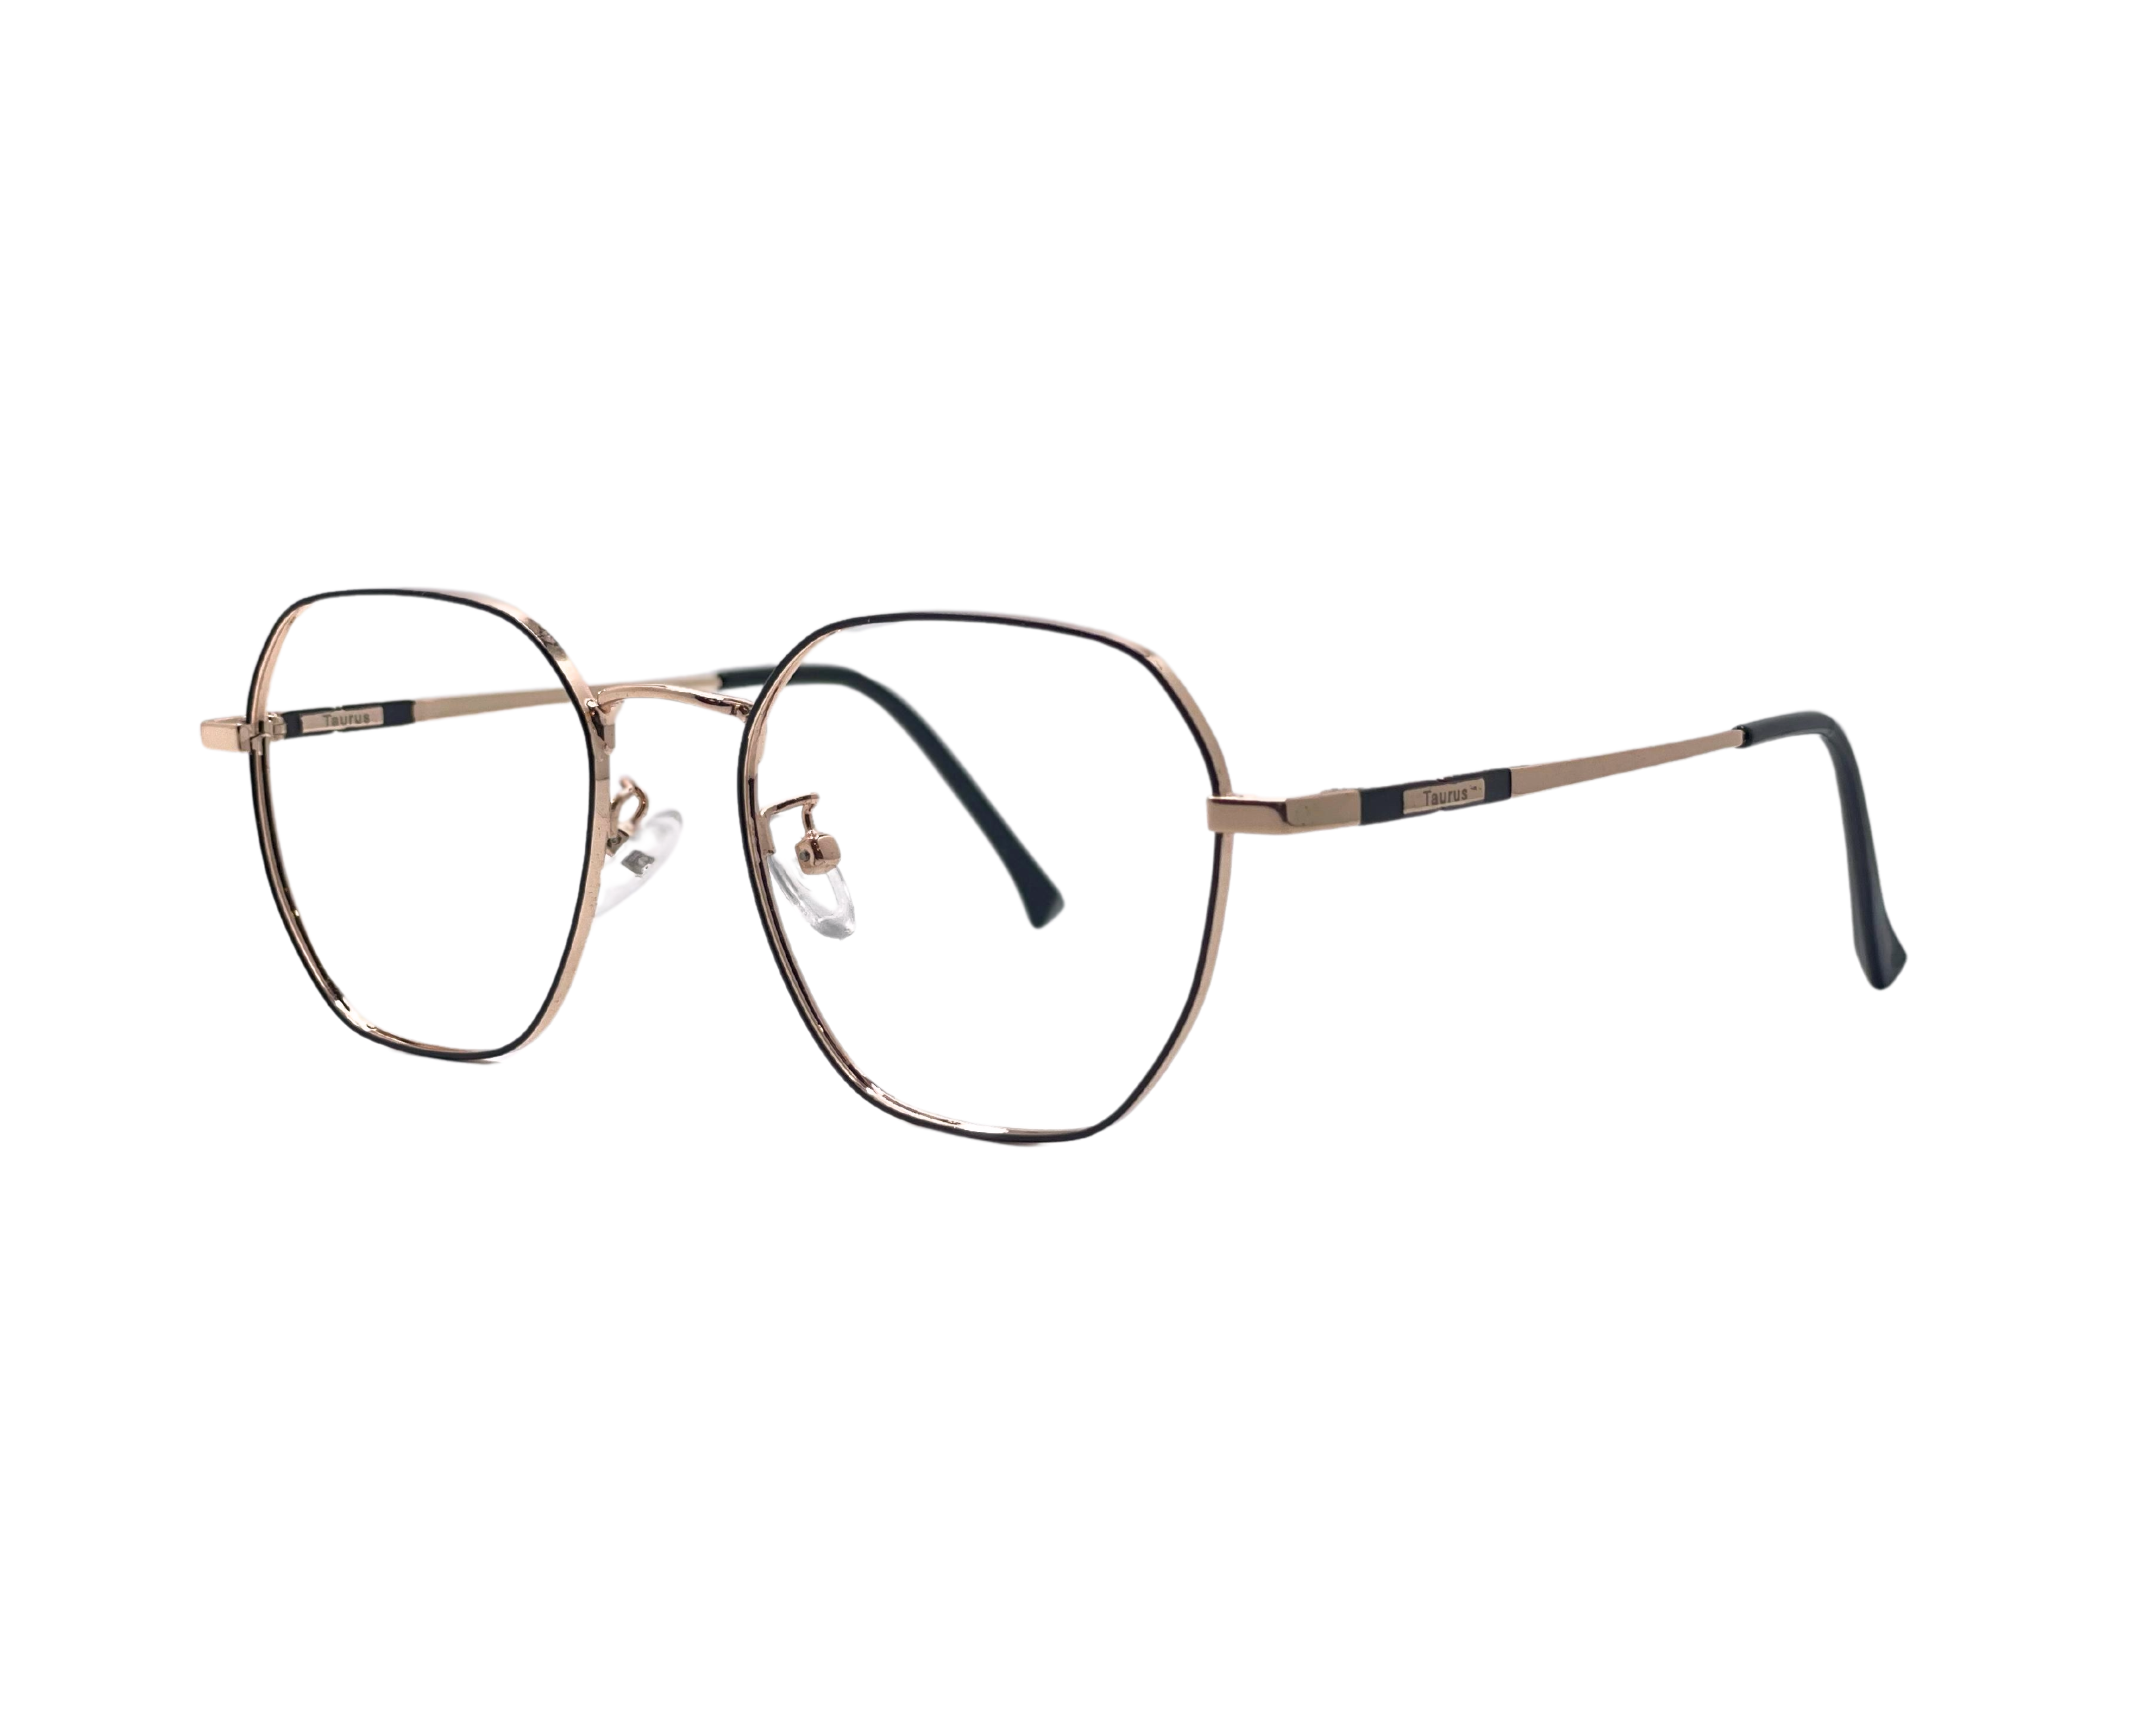 NS Deluxe - 3273 - Rose Gold - Eyeglasses